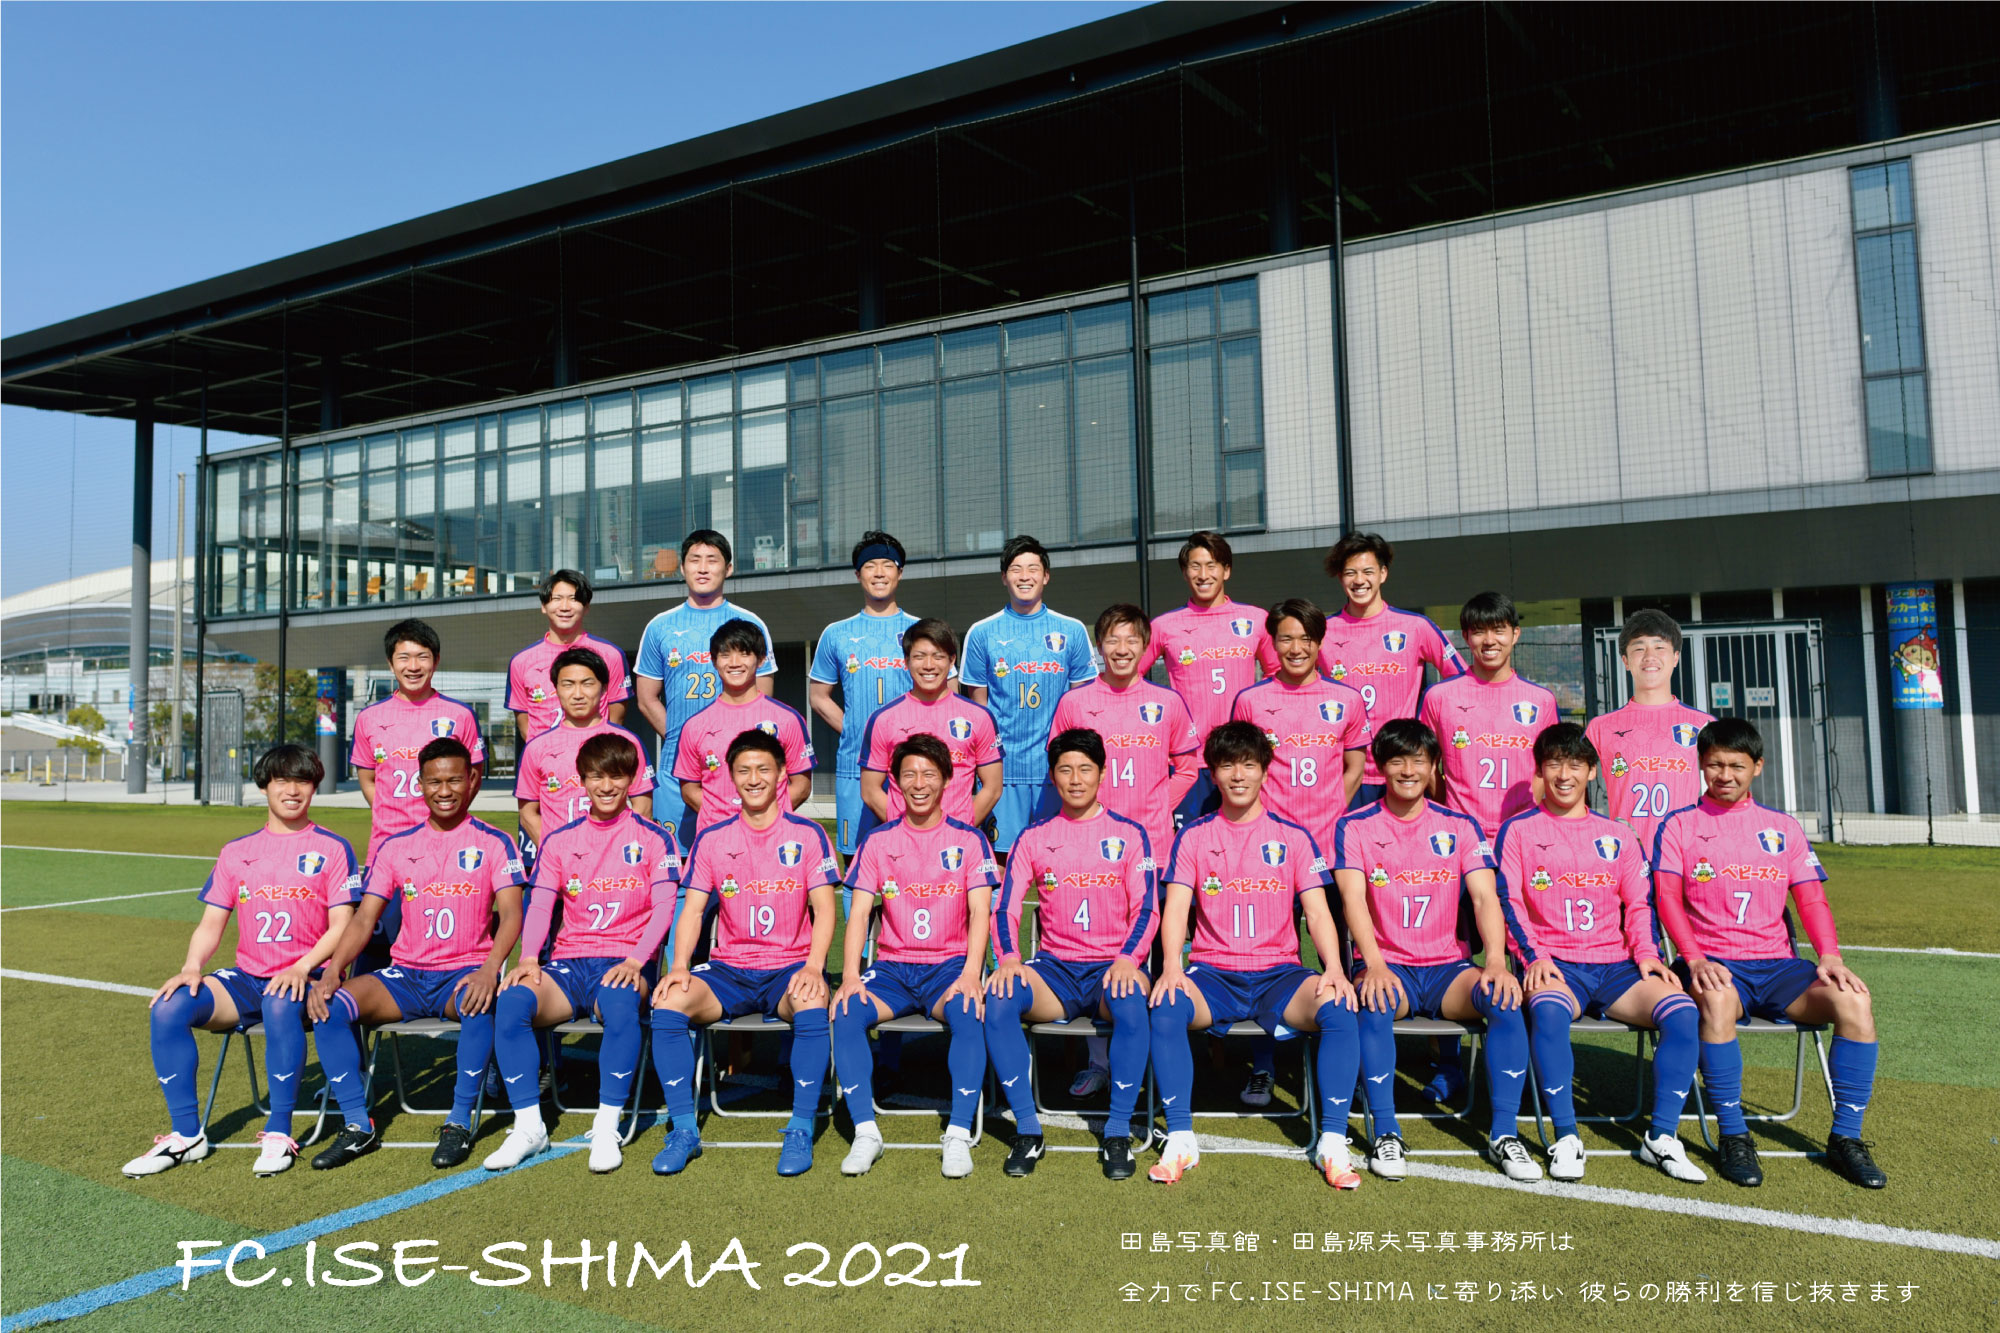 2021FC.ISE-SHIMA ALL2